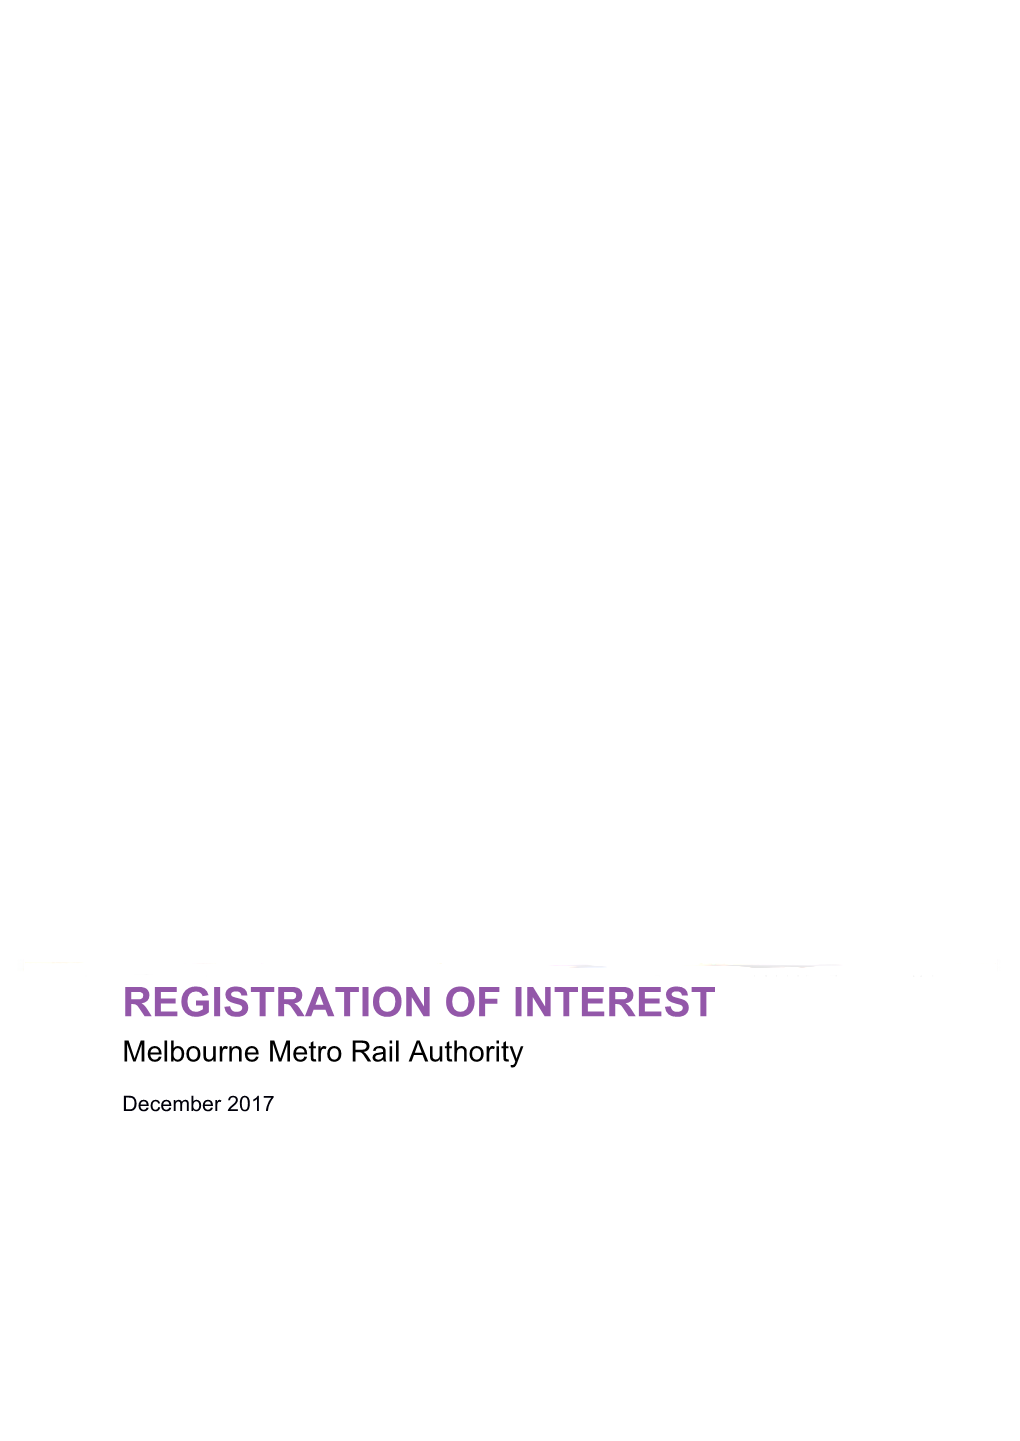 Registration of Interest